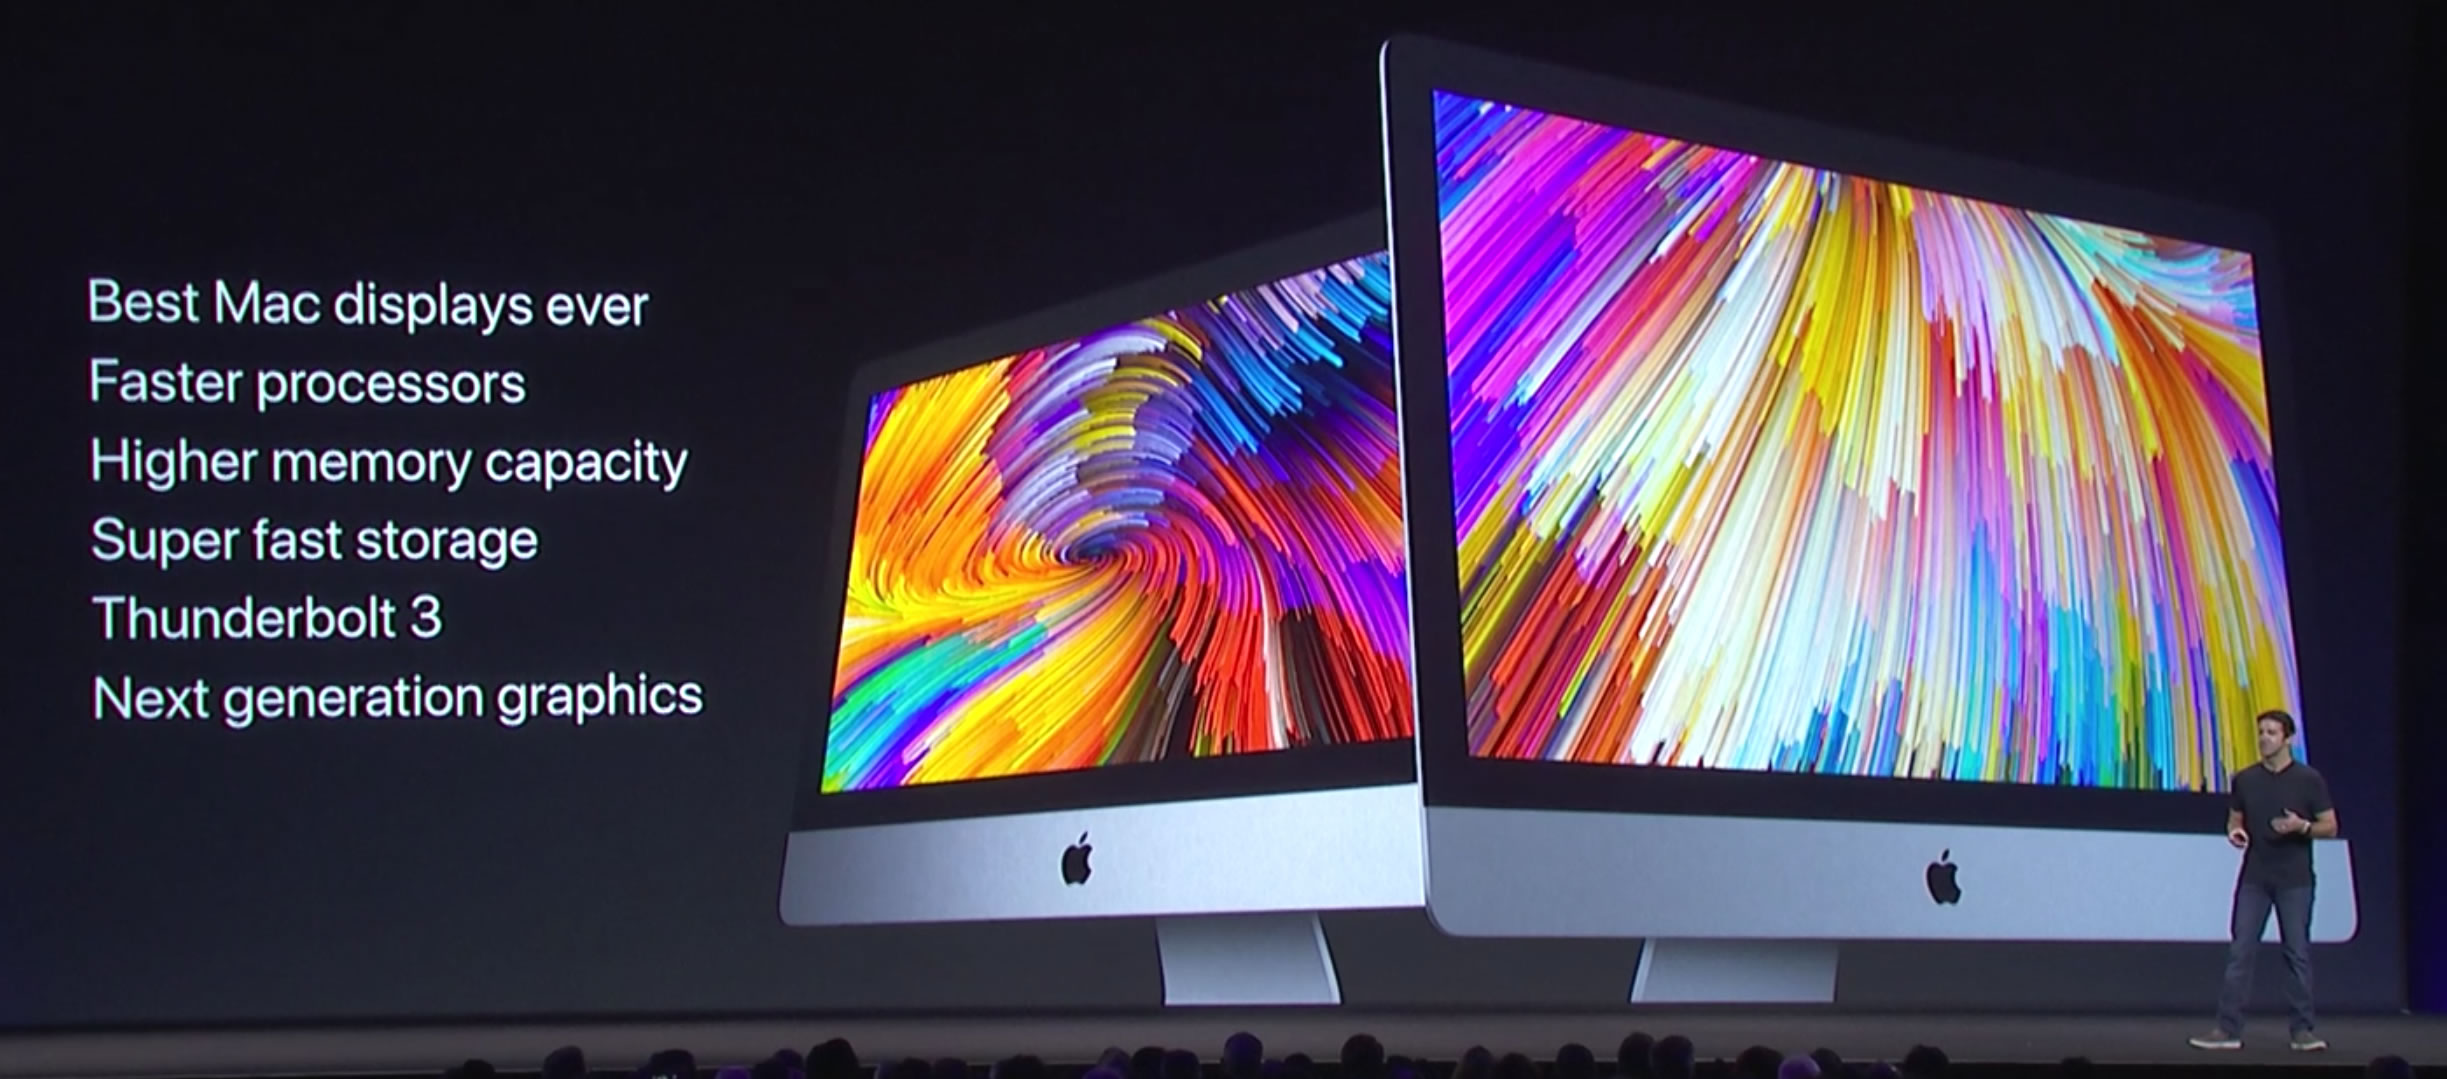 Apple Mac hardware update: iMac goes VR, MacBooks get timid Kaby update, iMac Pro arrives in December